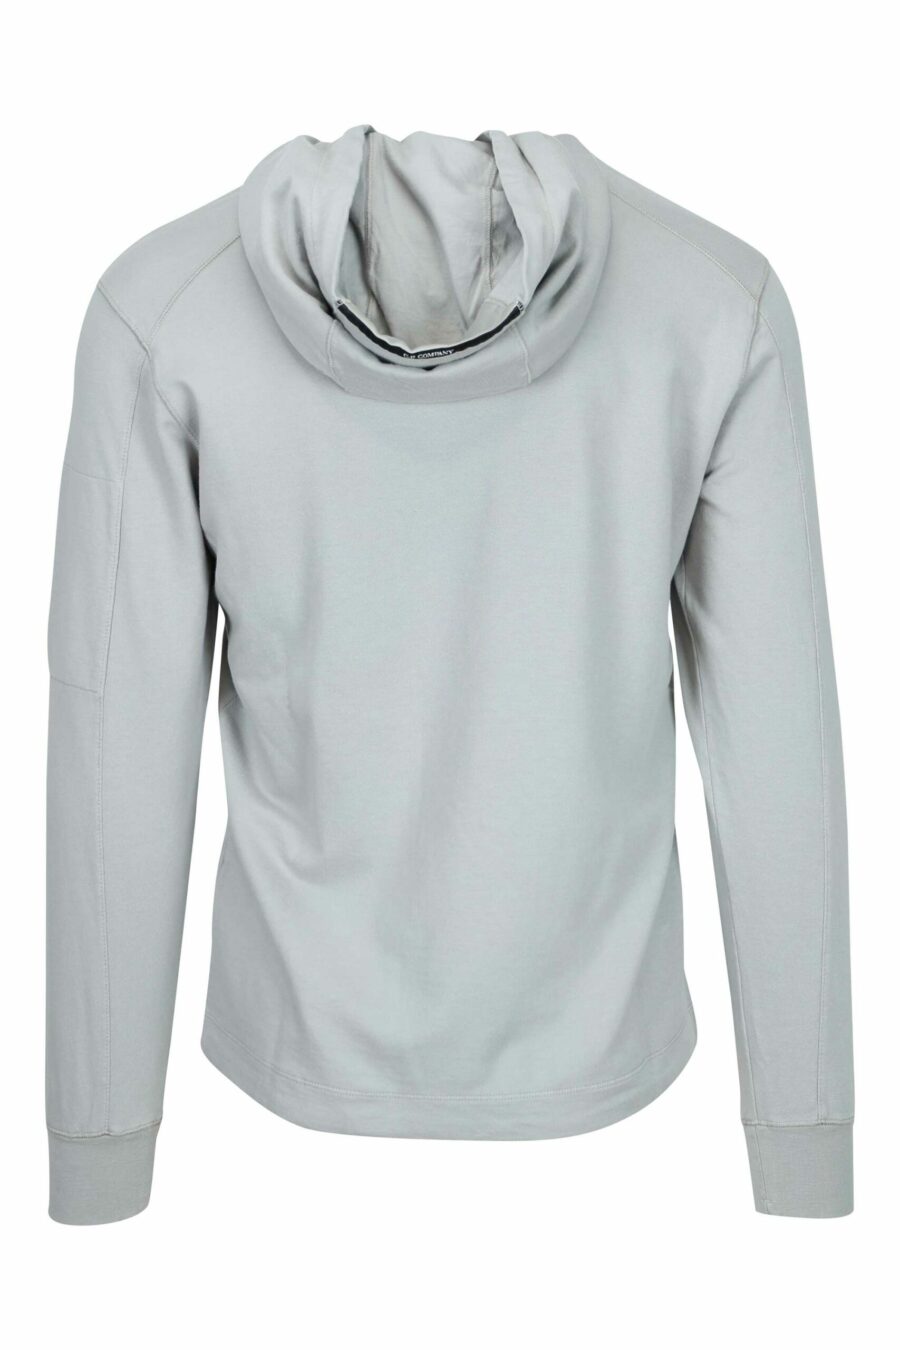 Grey hooded sweatshirt with mini-logo lens pocket - 7620943681031 2 scaled